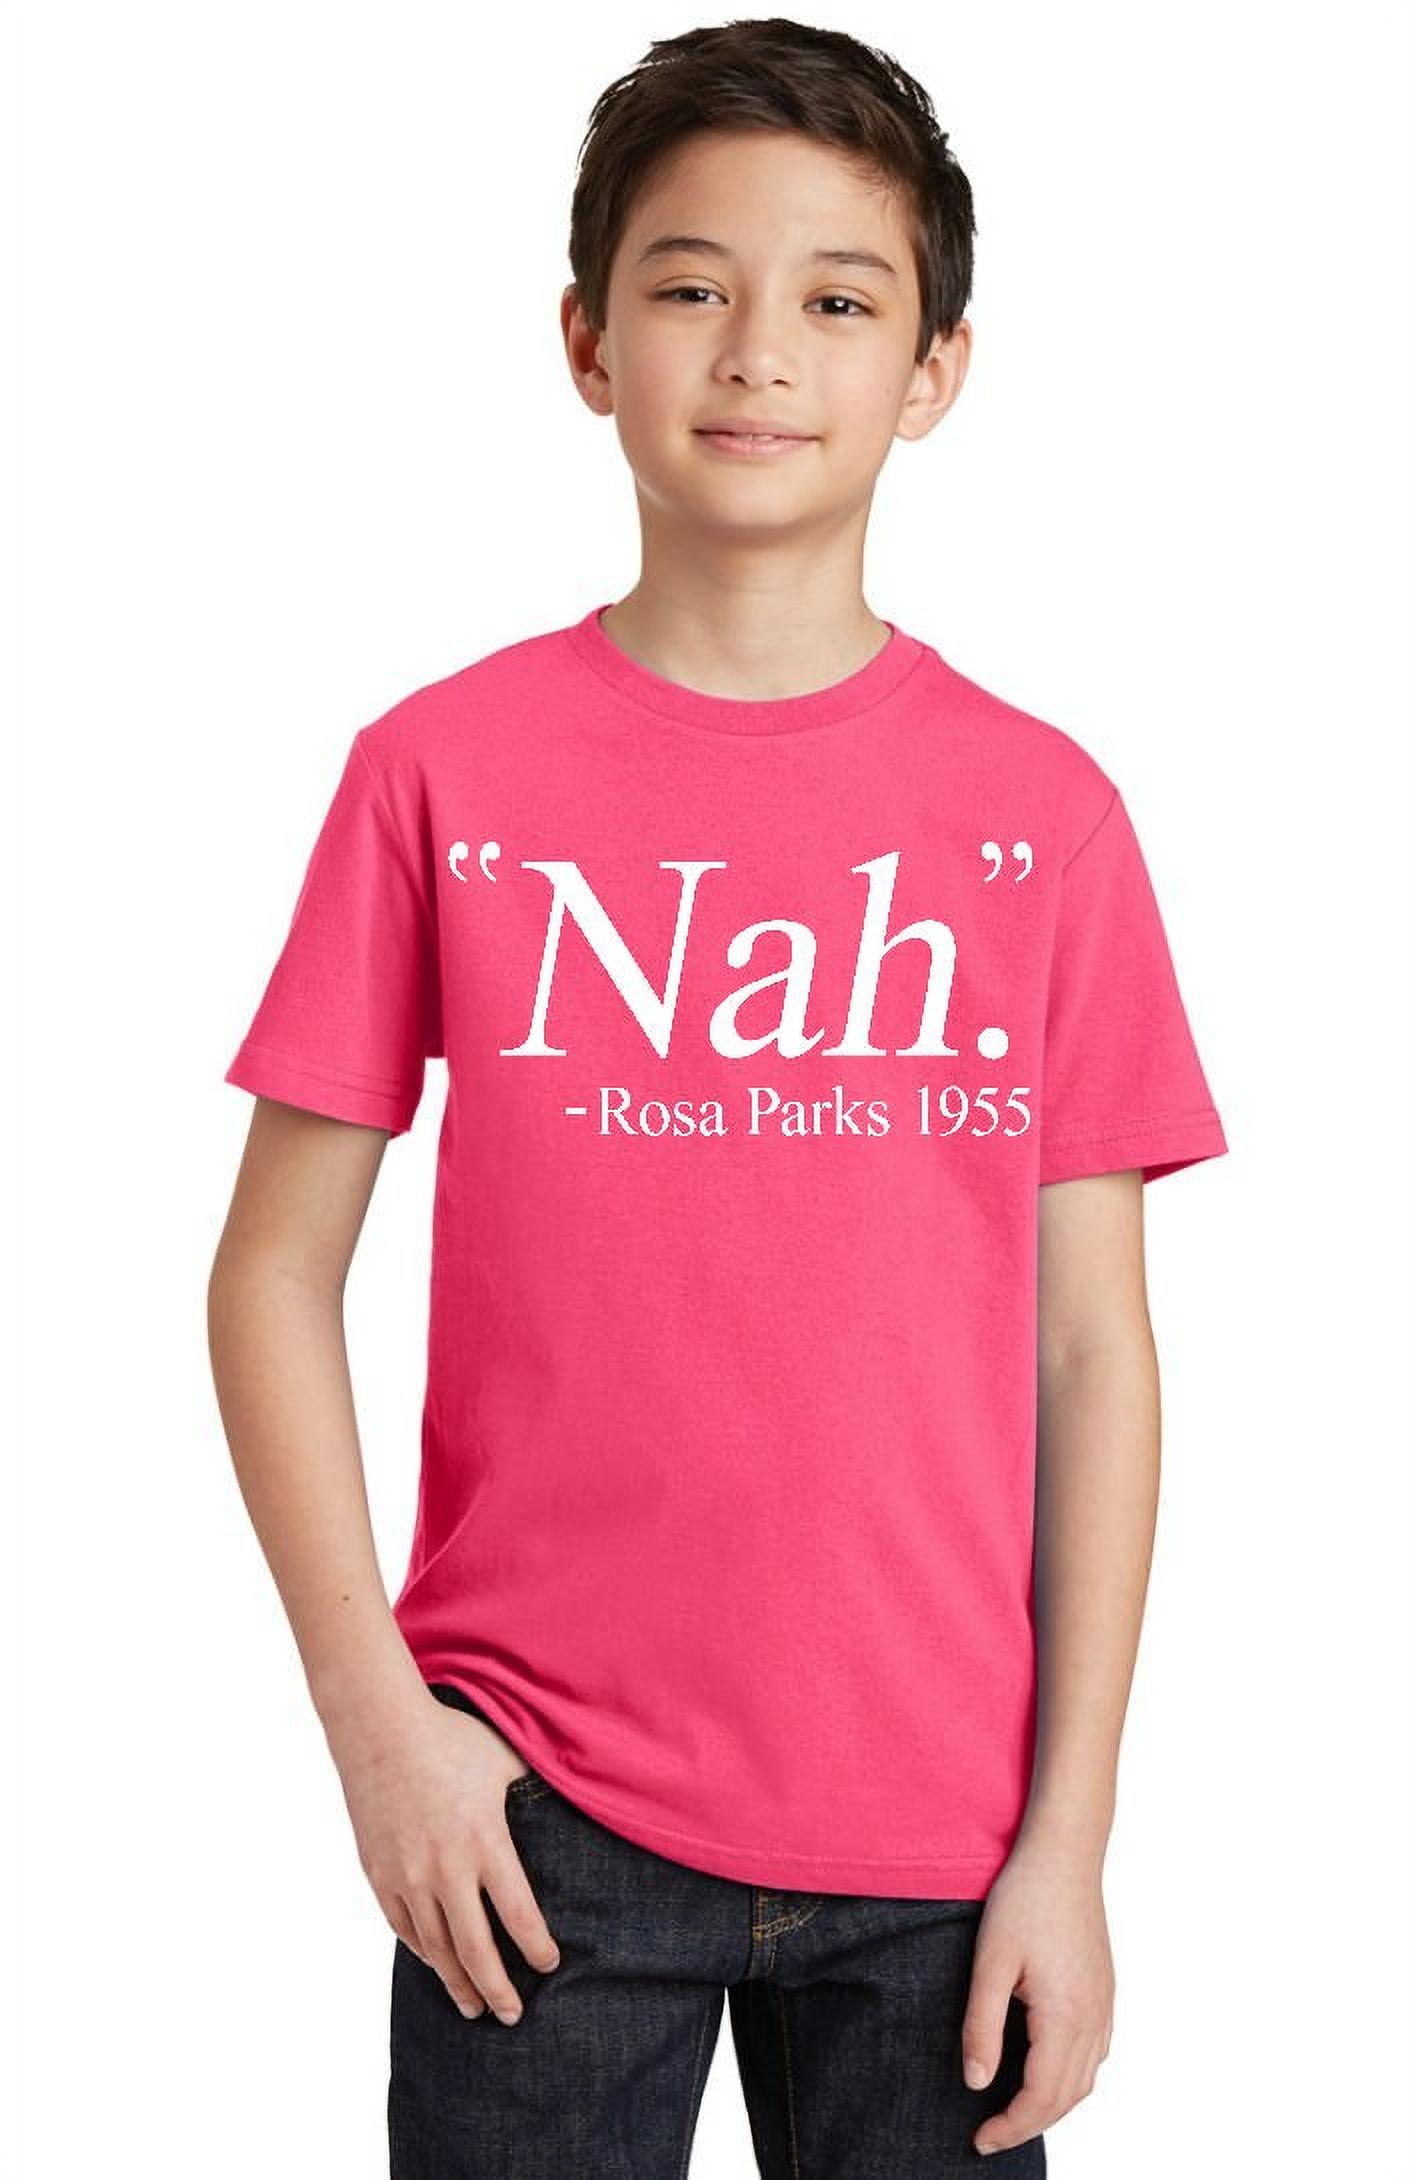 Nah. Rosa Parks 1955 Civil M, Youth Youth Royal Quote Rights T-shirt